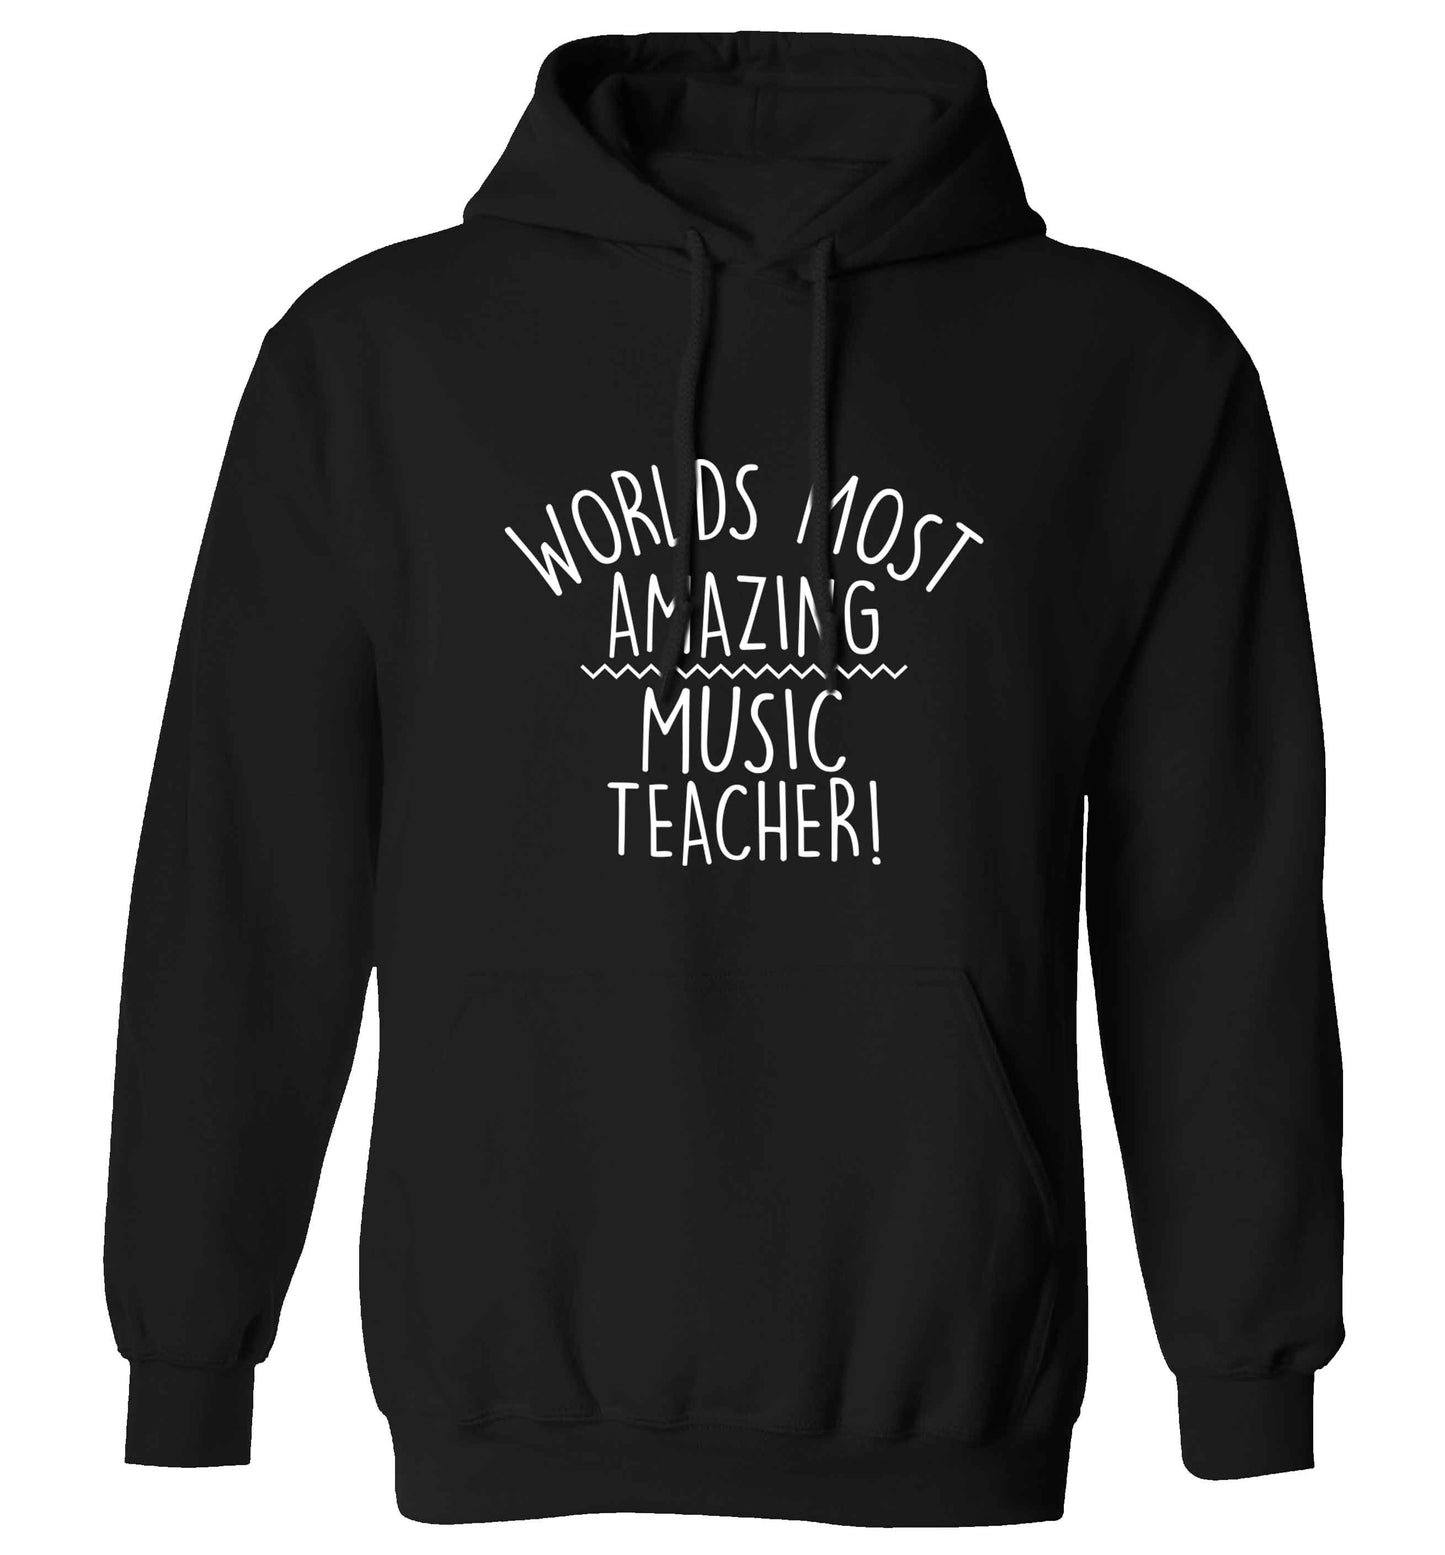 Worlds most amazing music teacher adults unisex black hoodie 2XL